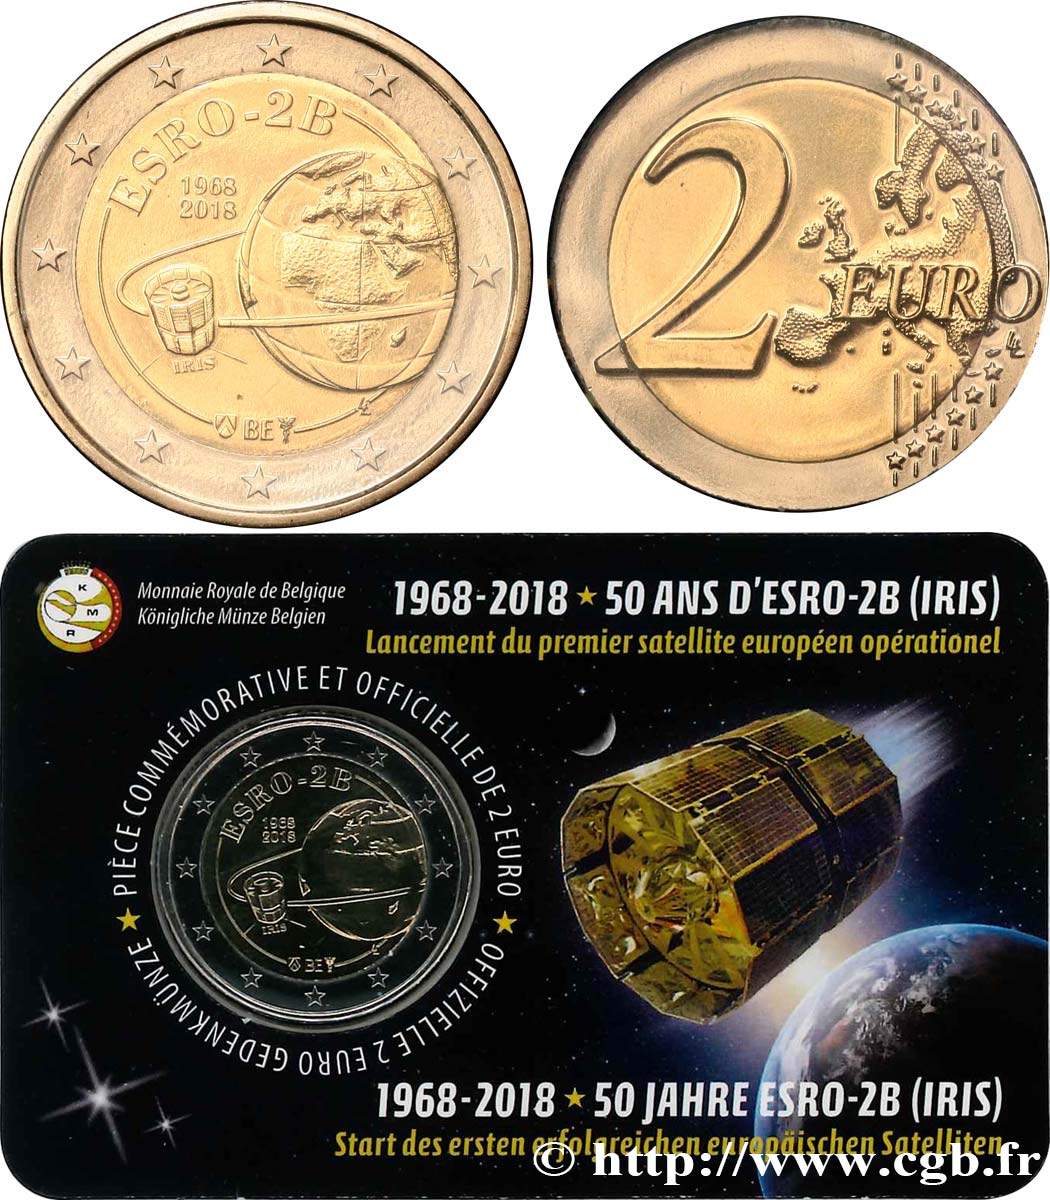 BELGIO Coin-card 2 Euro 50 ANS D’ESRO-2B (IRIS) - Version française 2018 FDC